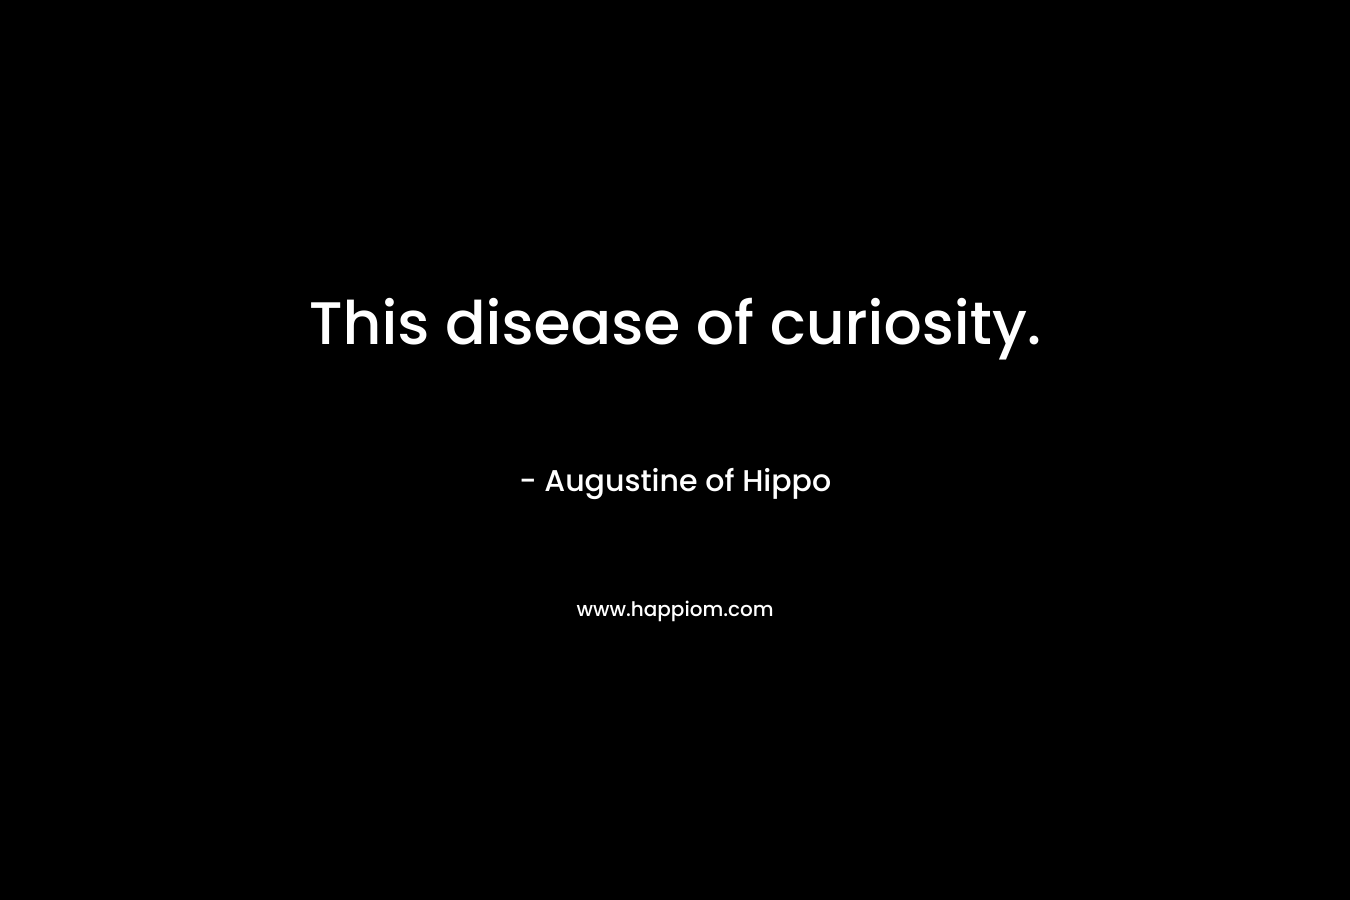 This disease of curiosity.